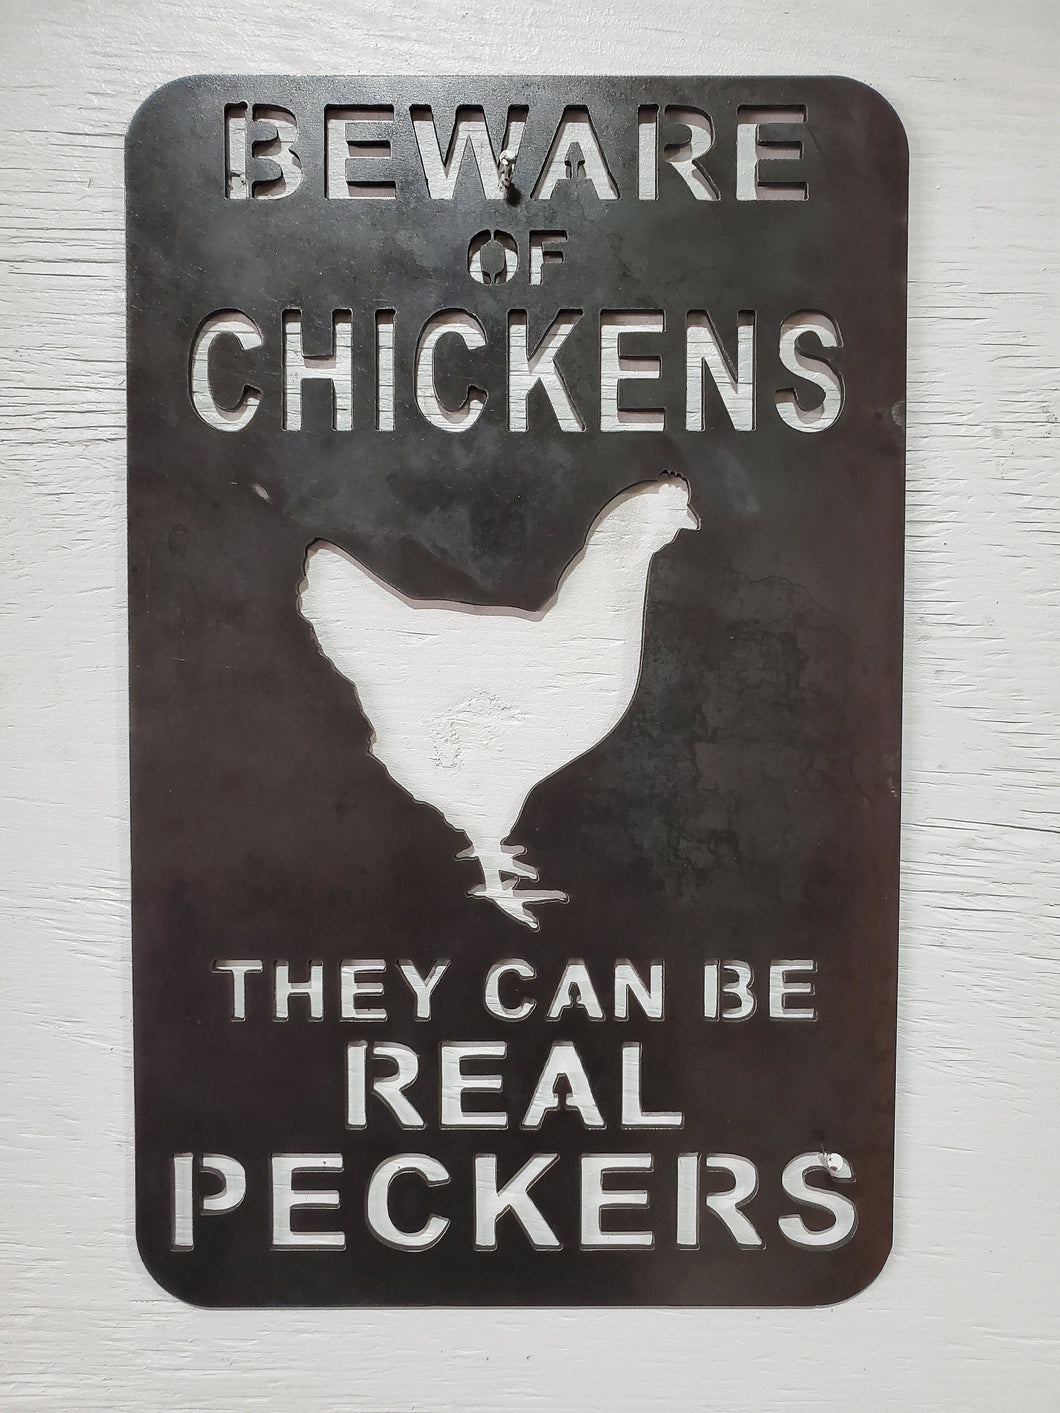 Beware of Chickens sign, 14ga steel.